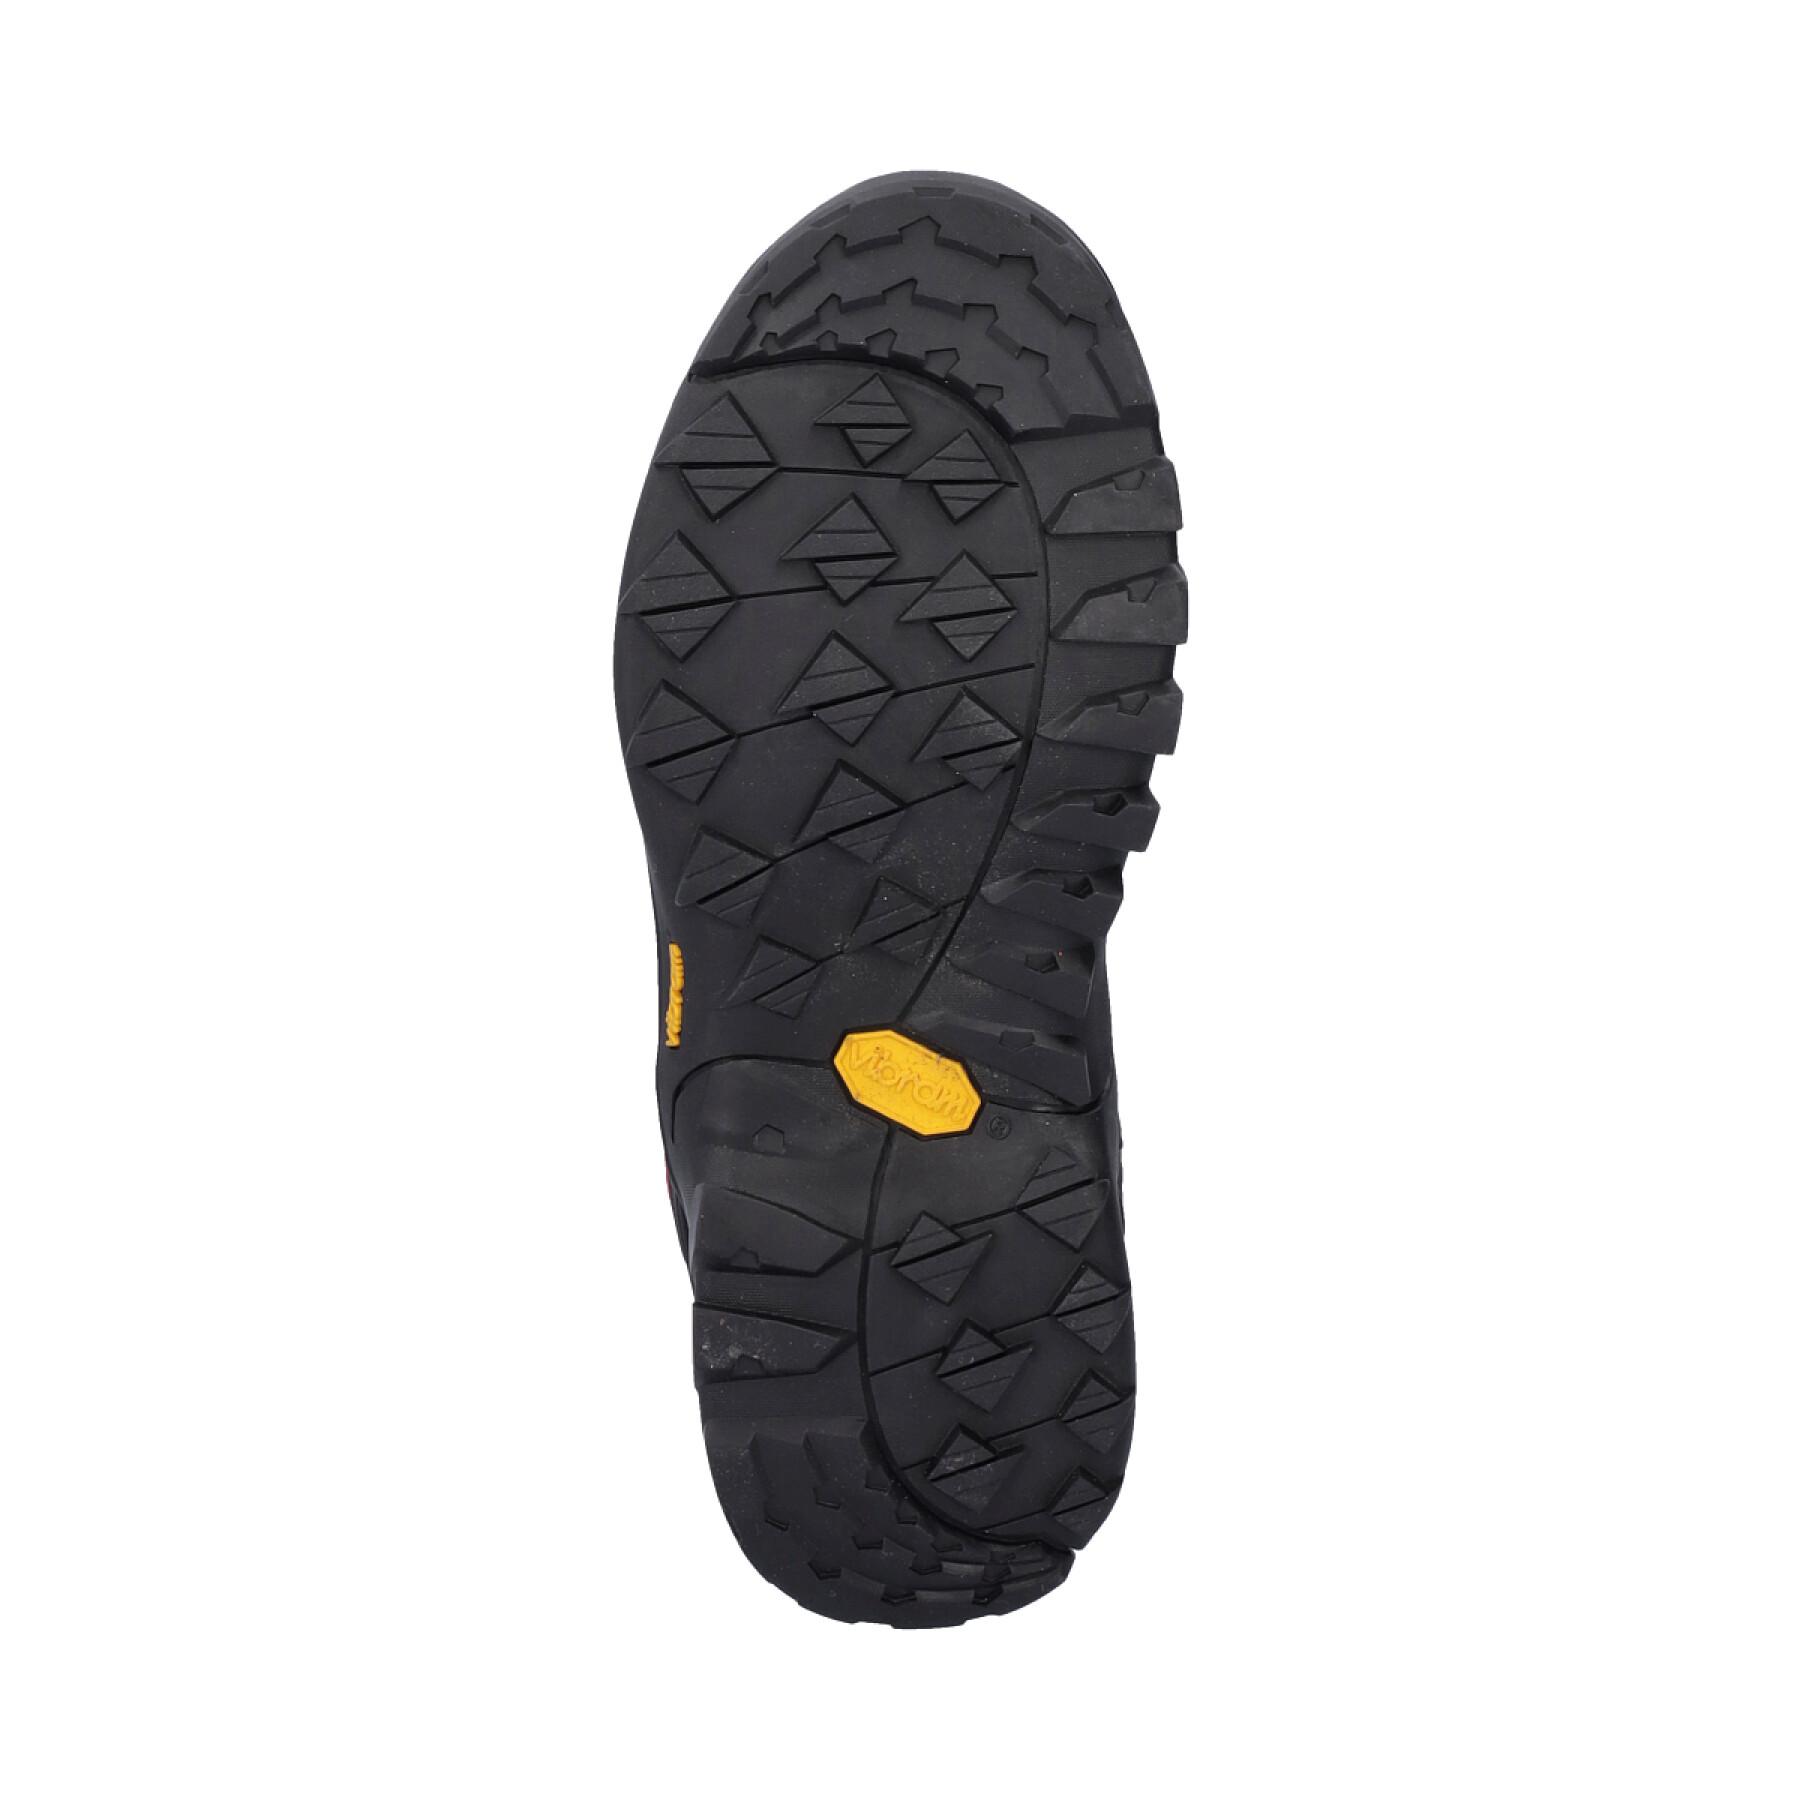 Mid hiking shoes boy CMP Moon Waterproof